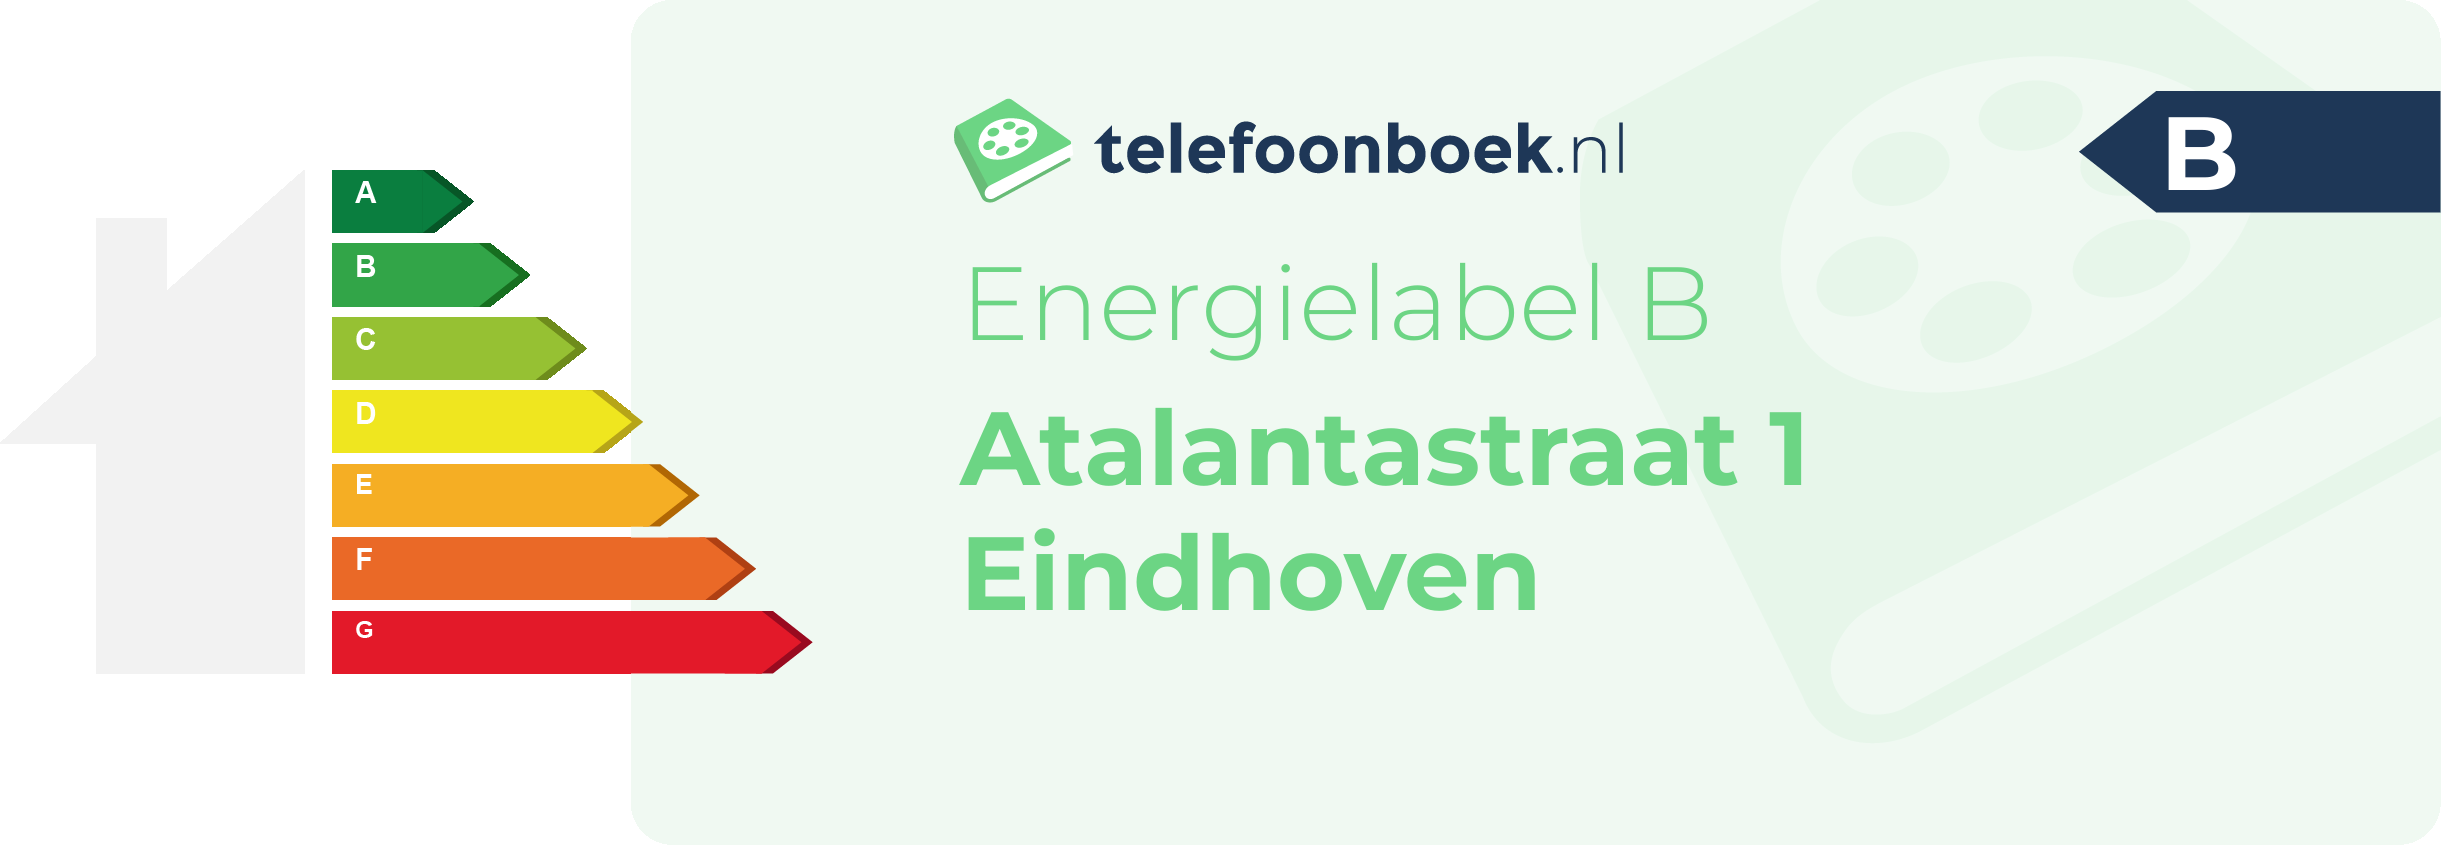 Energielabel Atalantastraat 1 Eindhoven